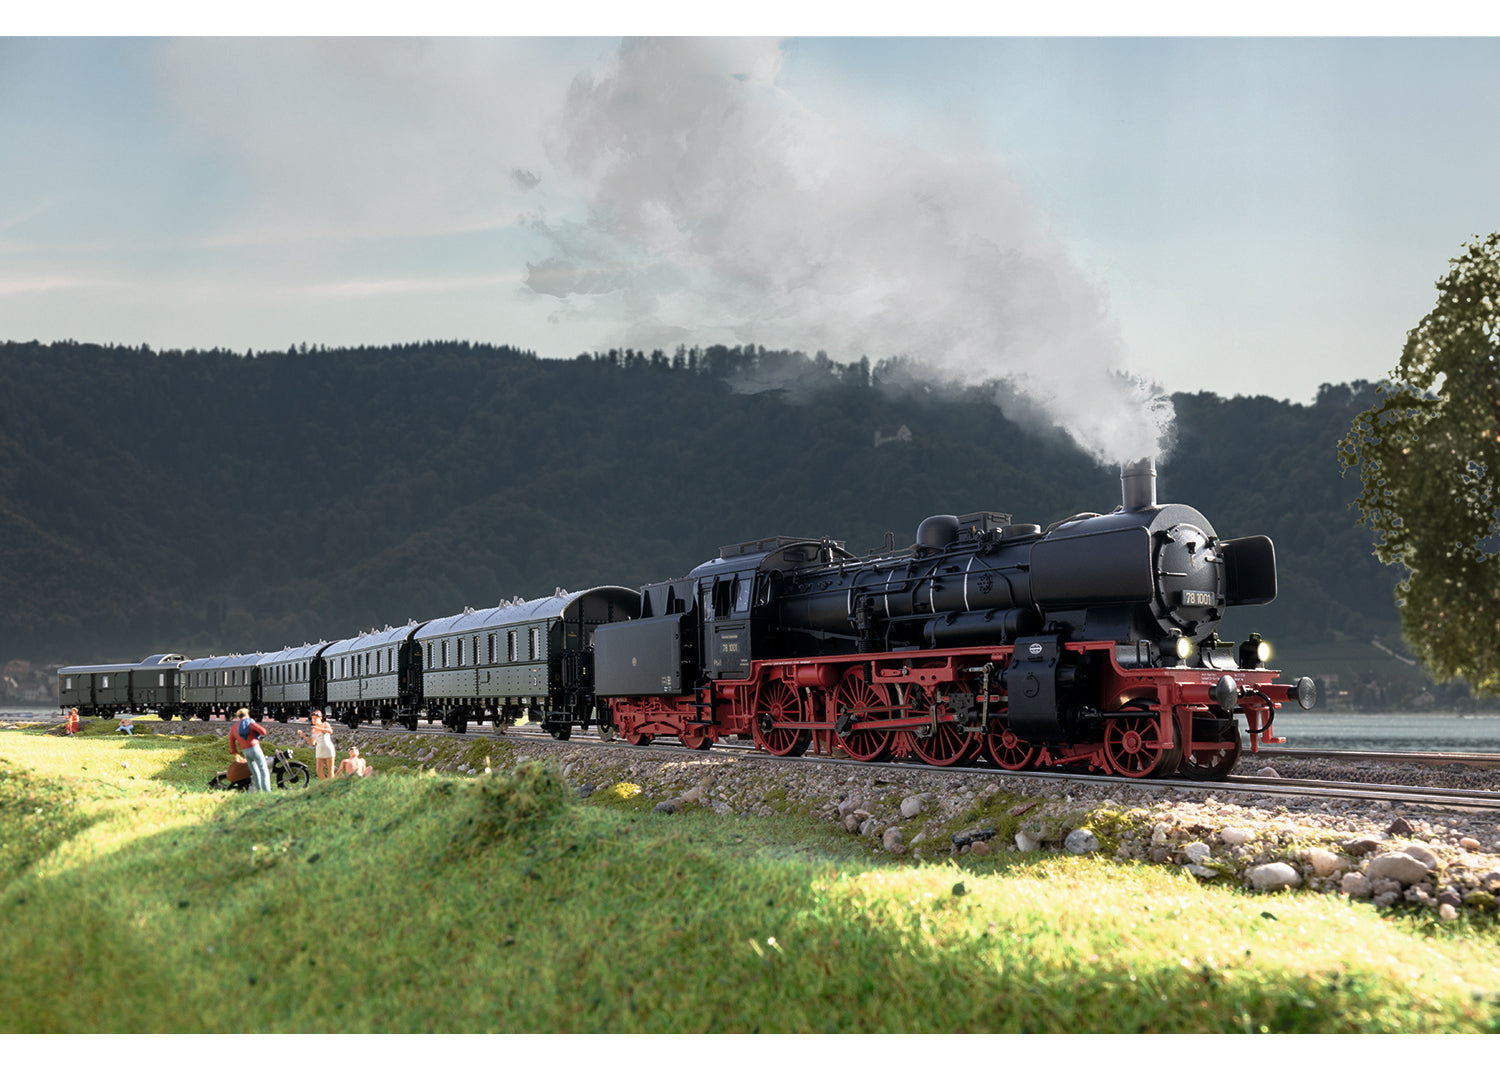 Trix 22890 - Class 78.10 Steam Locomotive